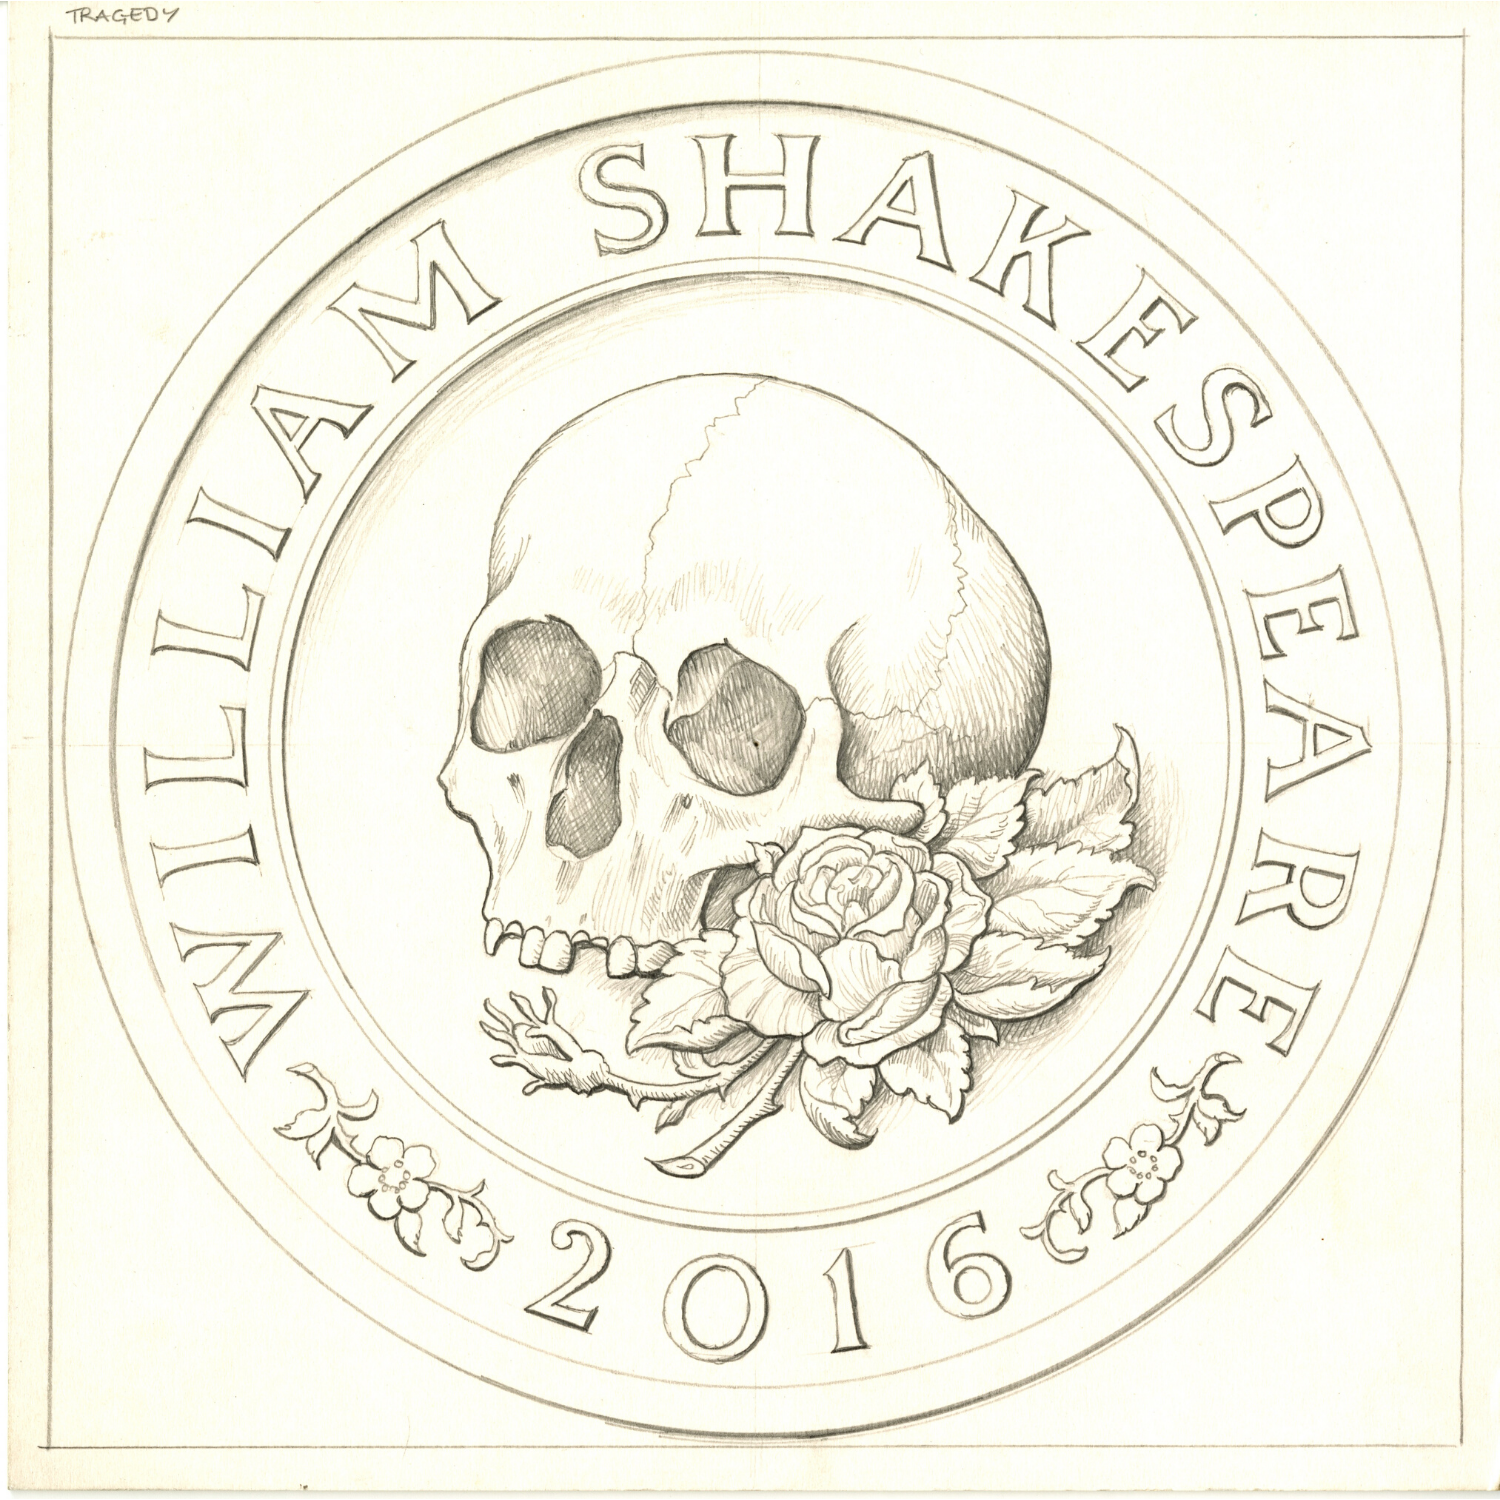 Artwork for the 2016 Shakespeare £2 coin